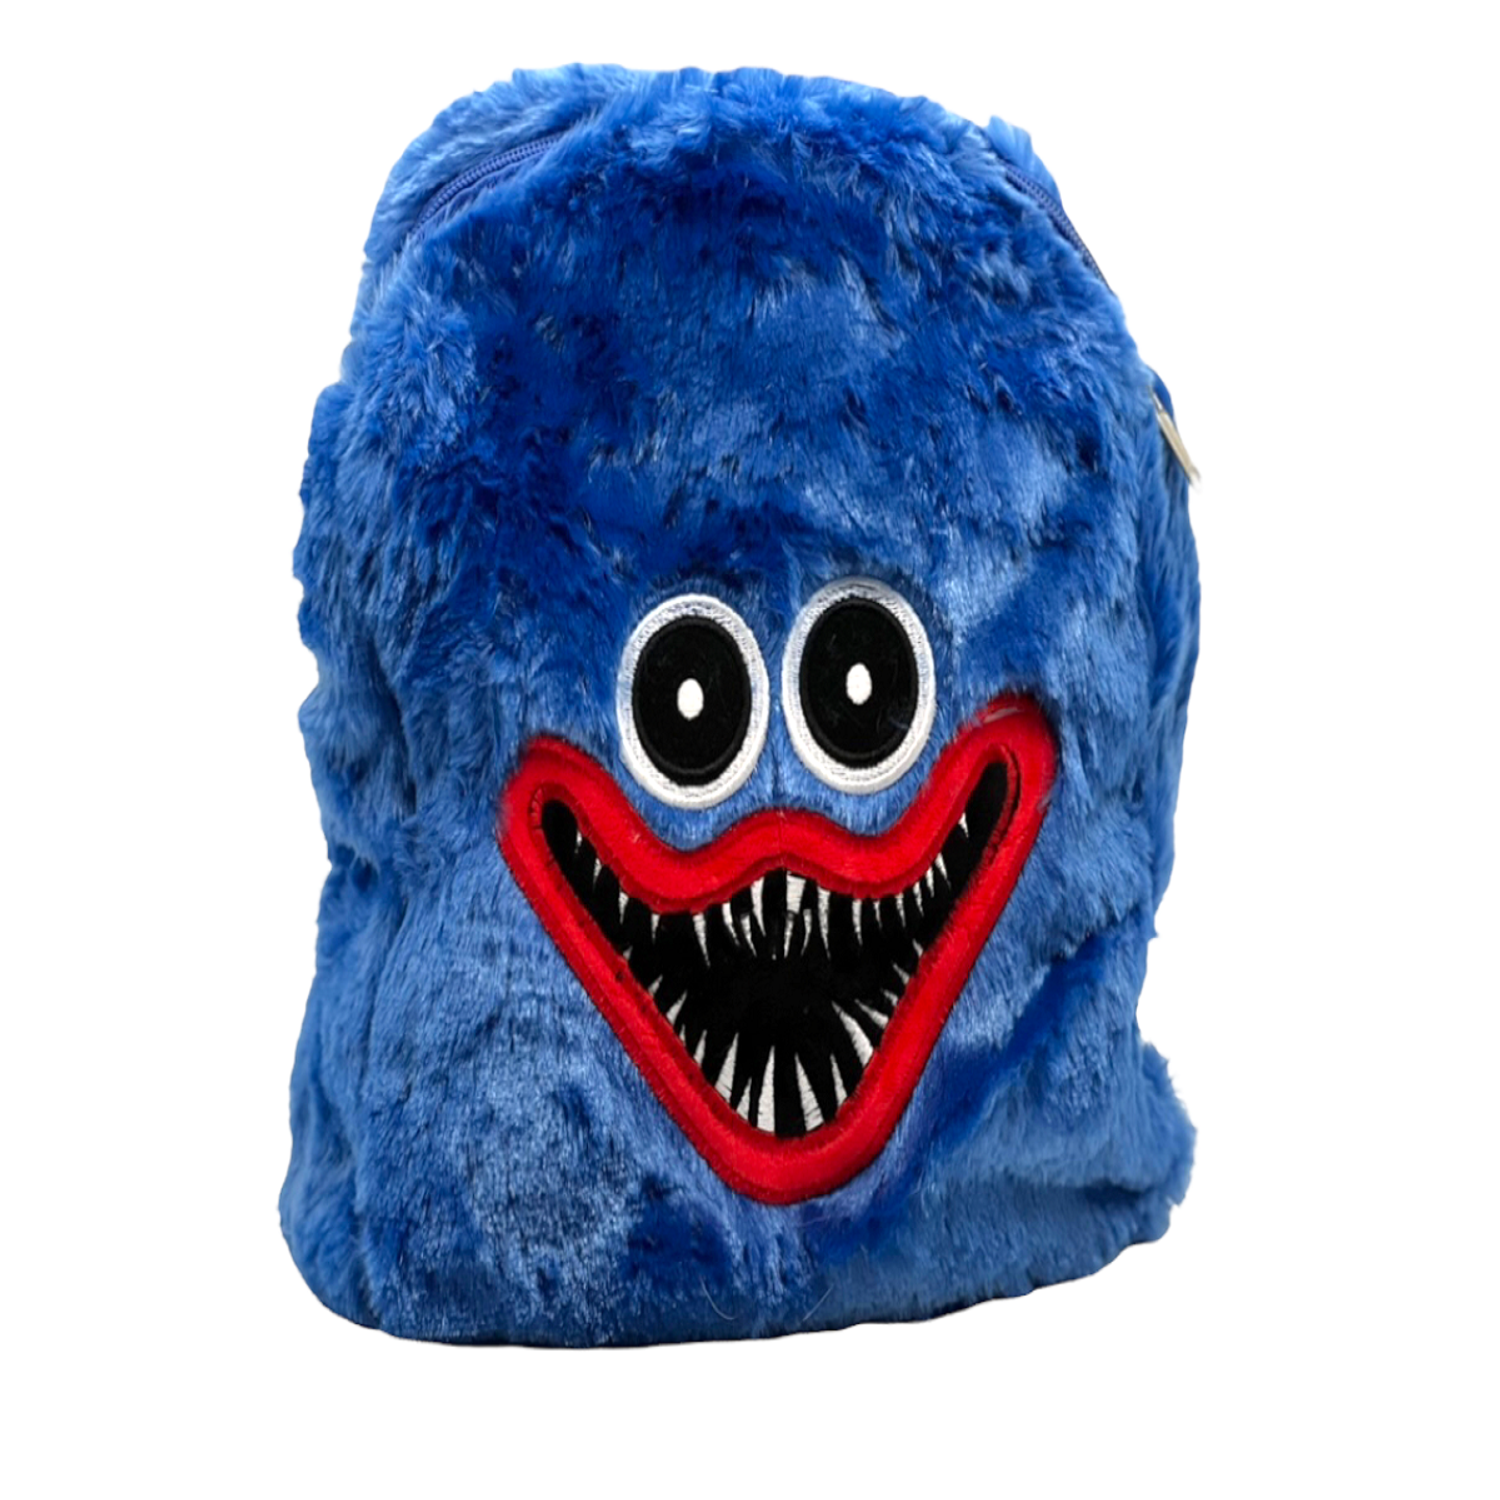 Мягкая игрушка Panawealth International Хаги Ваги рюкзак синий - фото 1